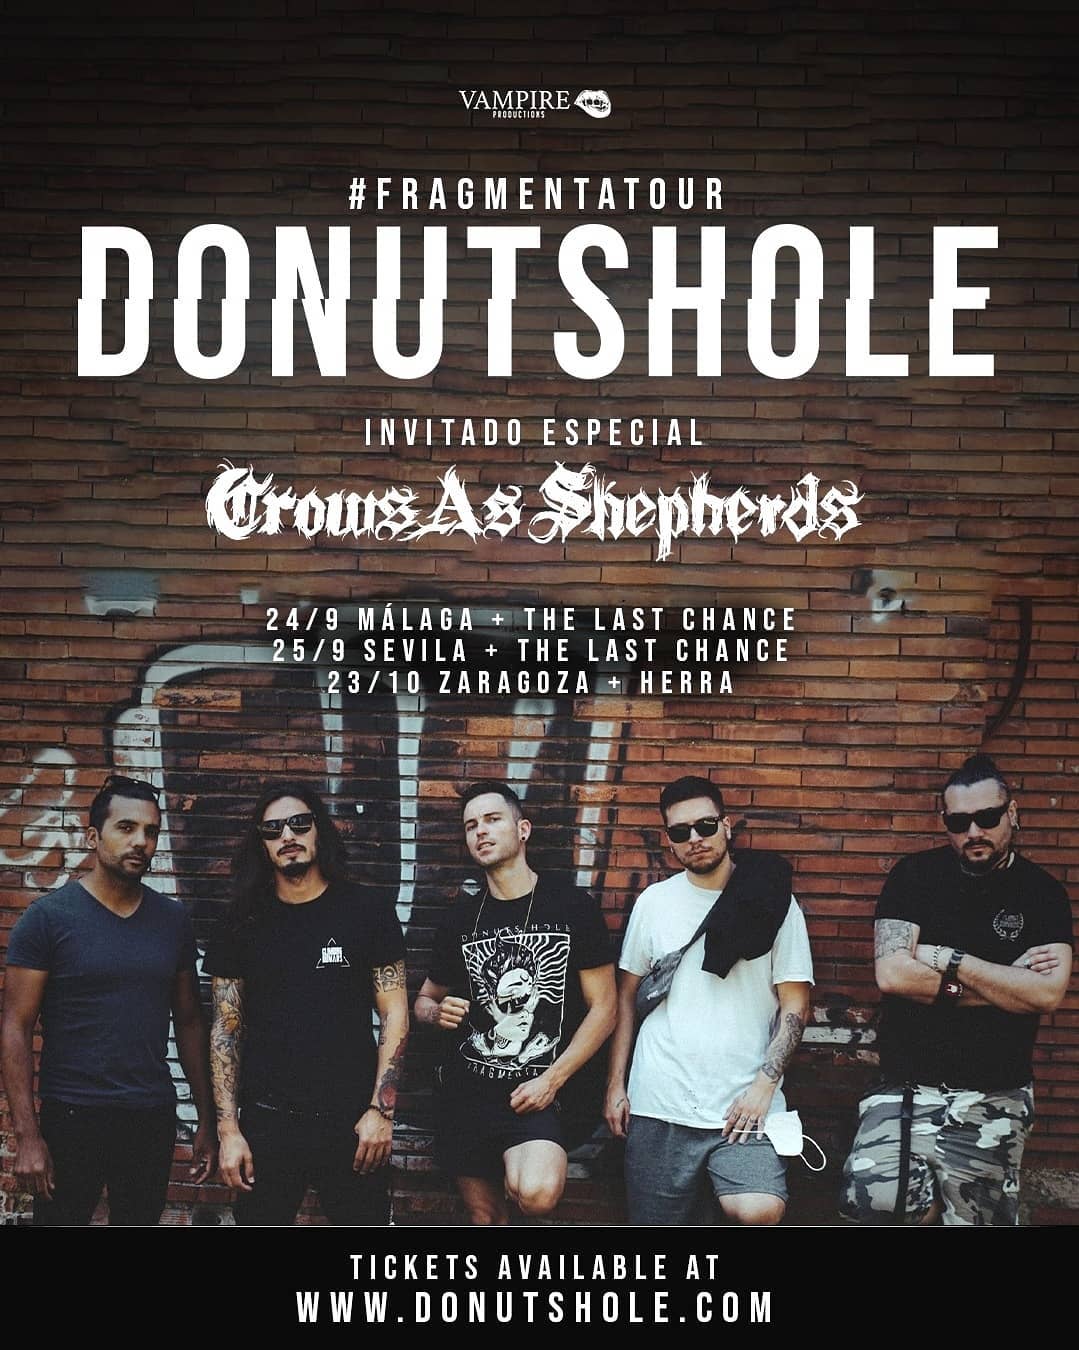 Donuts Hole + Crows AS Shepherds + The Last Chance + Herra, 3 fechas por España